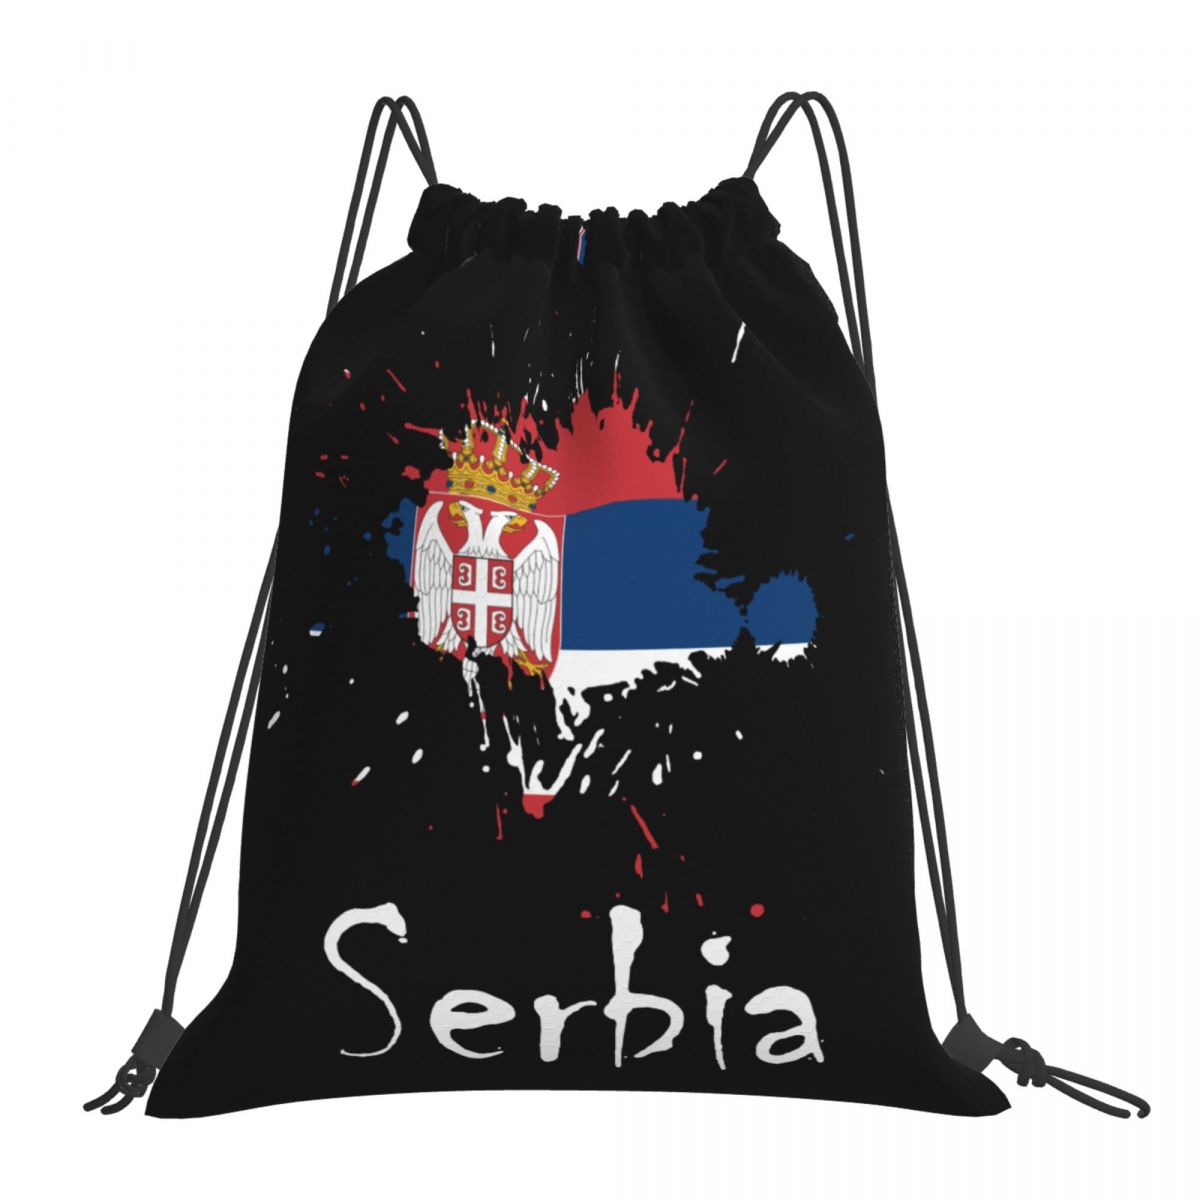 Serbia Ink Spatter Waterproof Adjustable Lightweight Gym Drawstring Bag